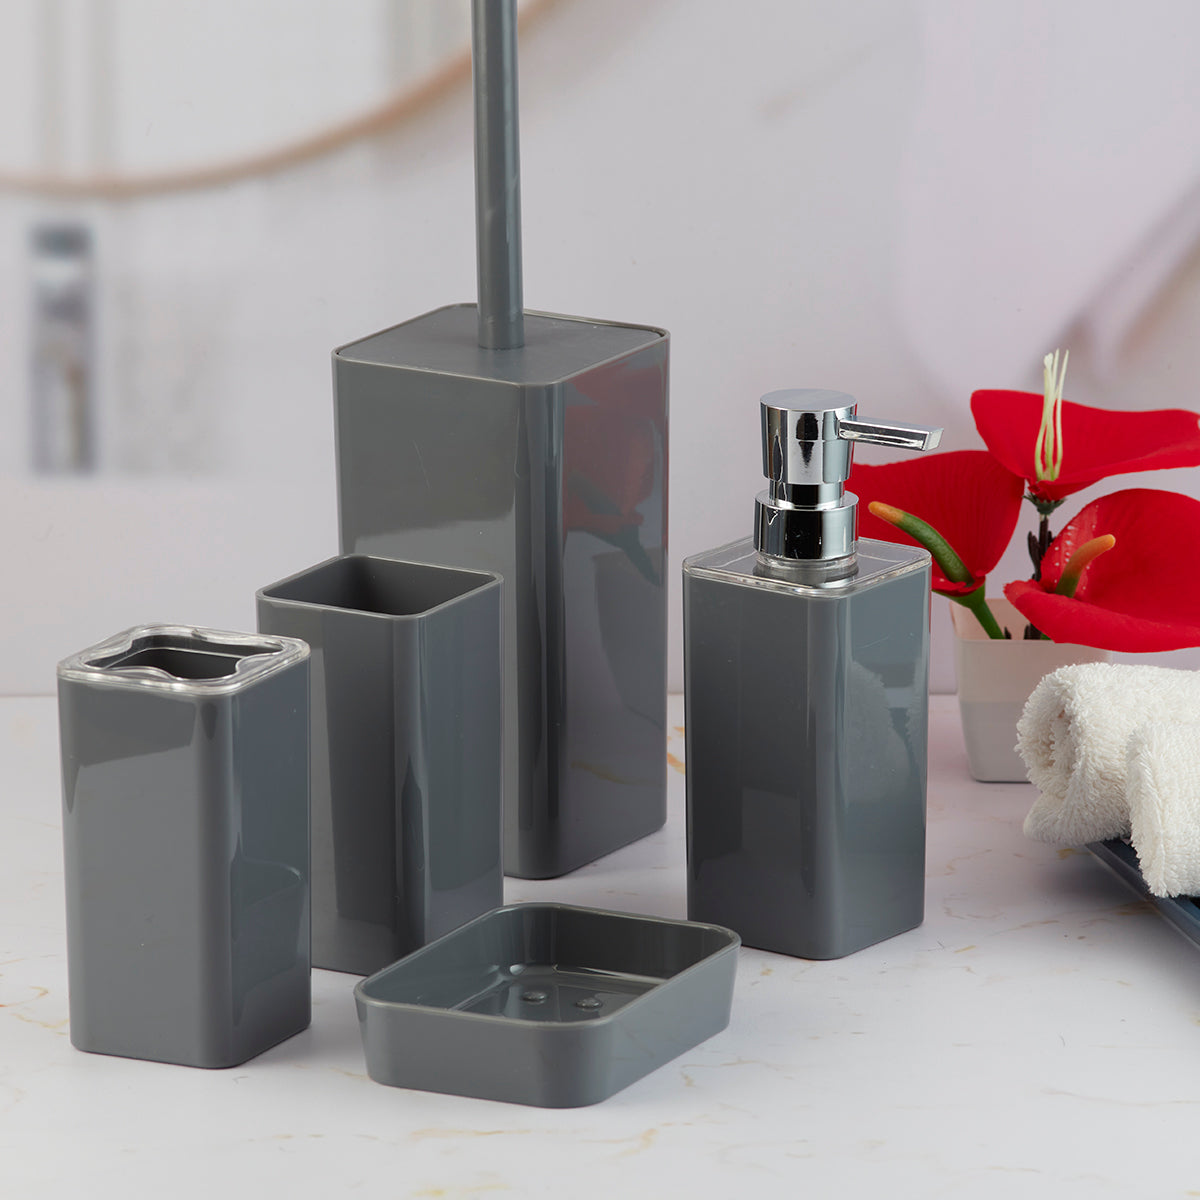 Acrylic Bathroom Accessories Set of 5 Bath Set with Soap Dispenser (10026)